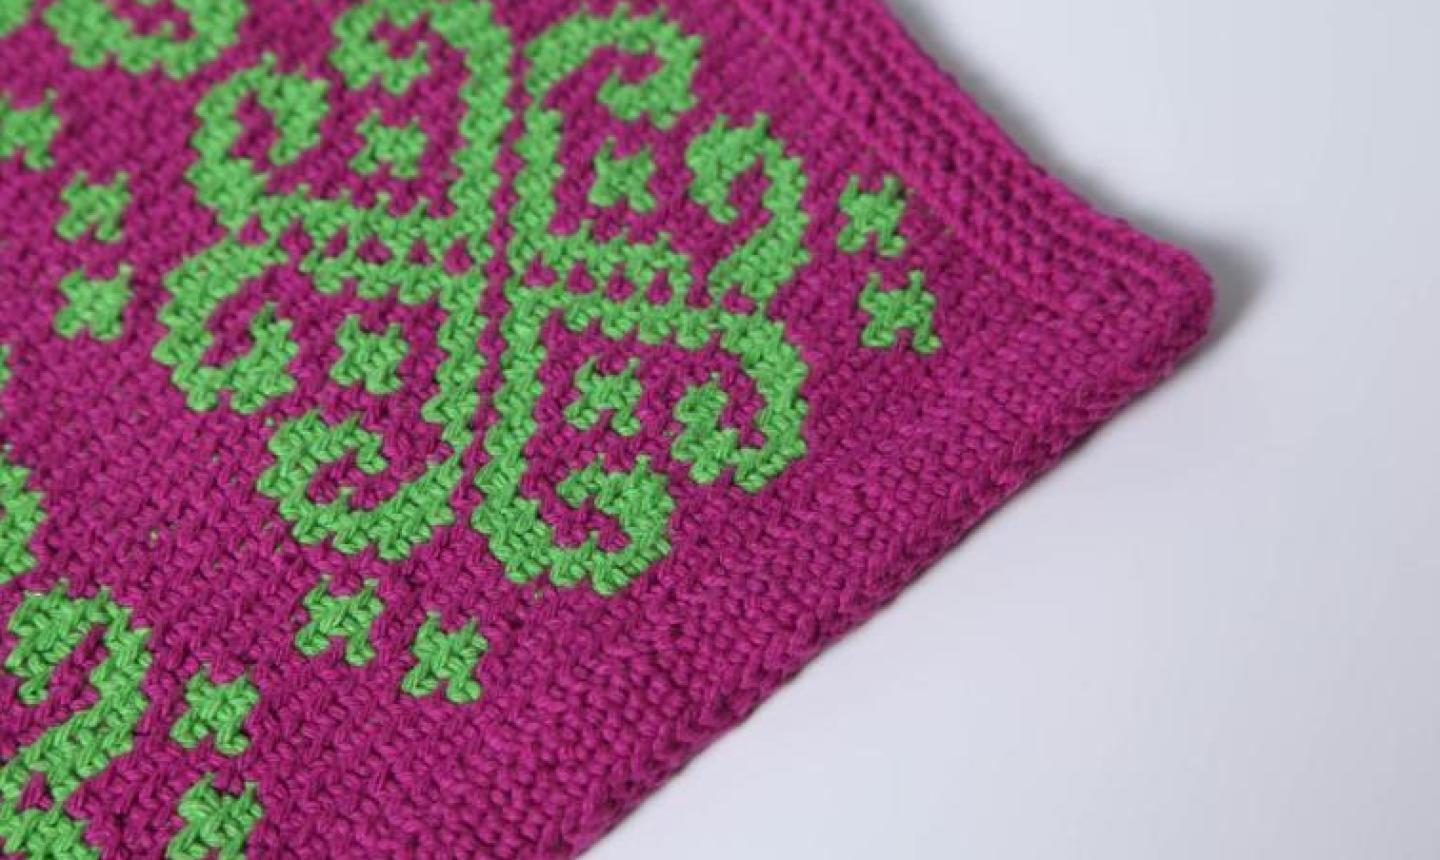 Tapestry/Graphgan Tips/Help! : r/crochet